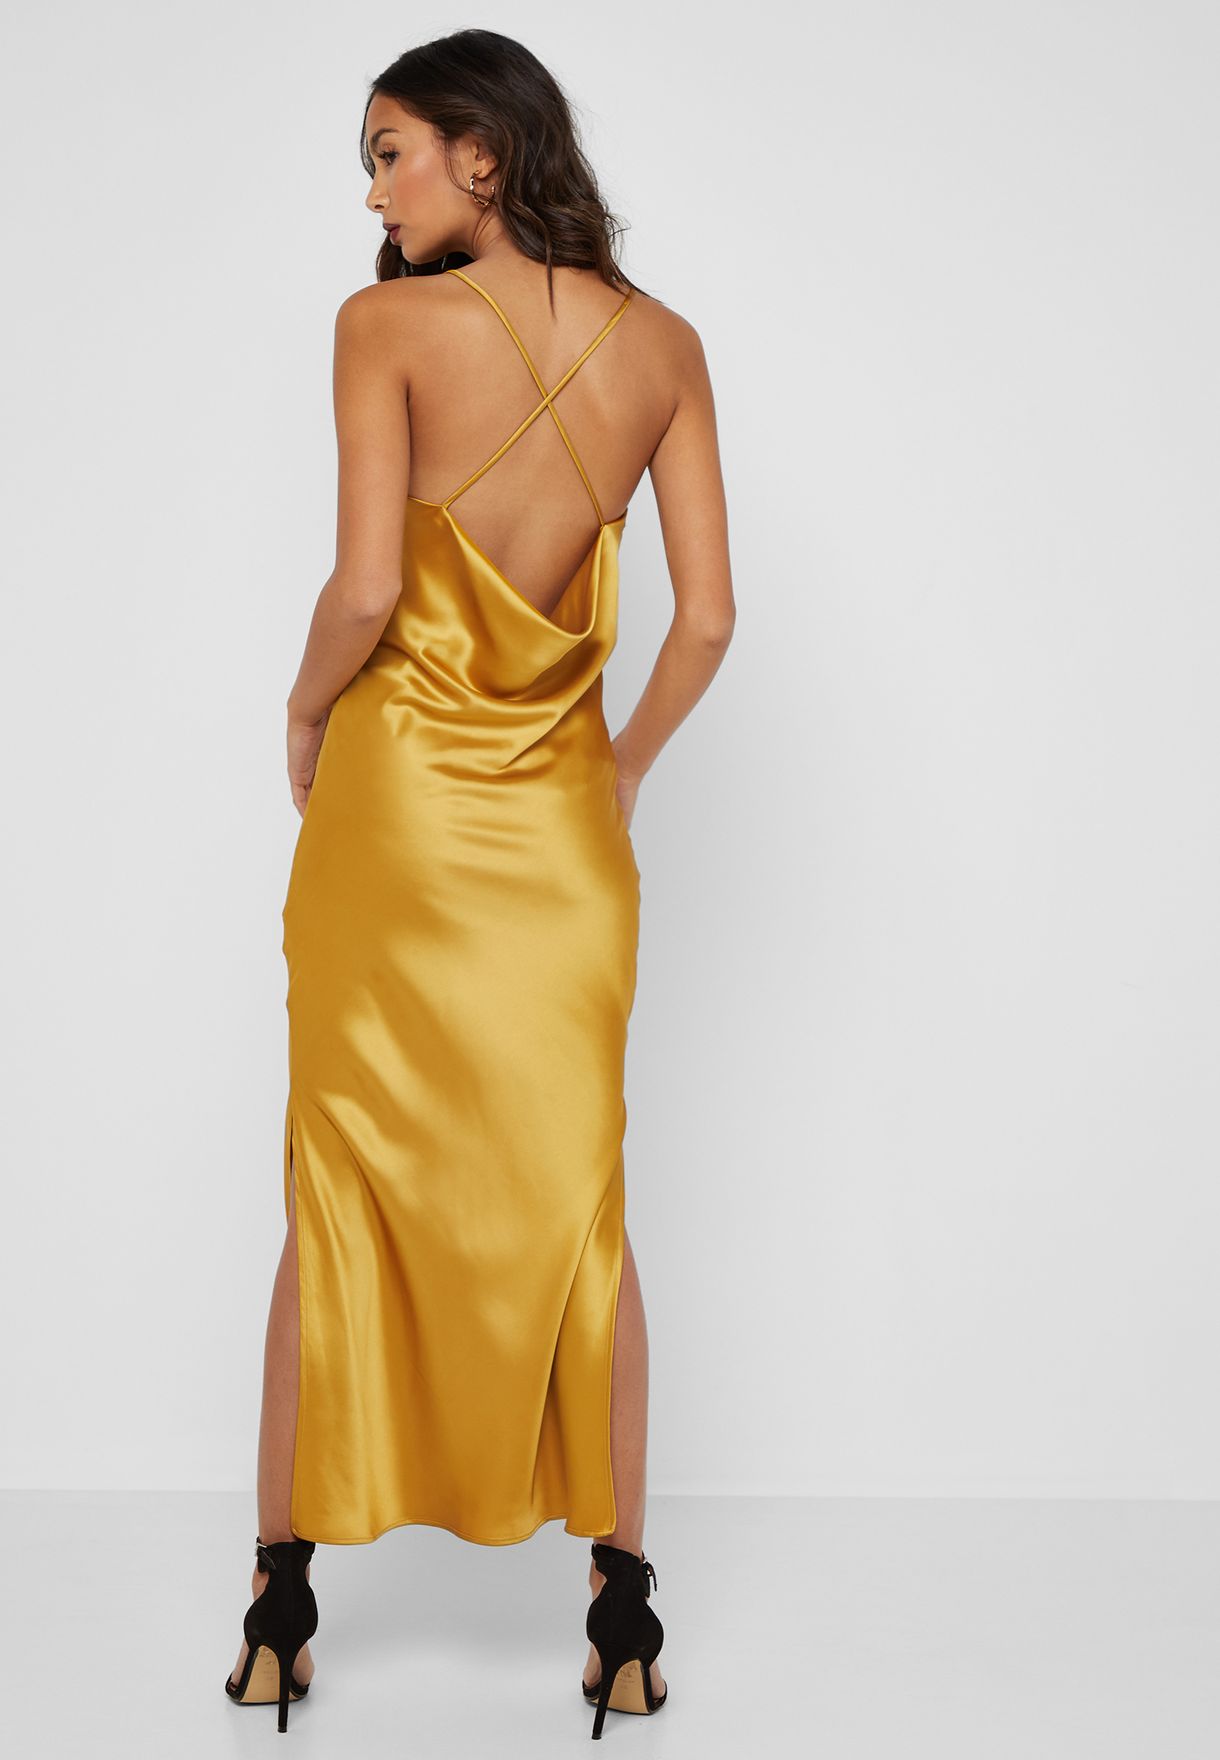 topshop gold slip dress